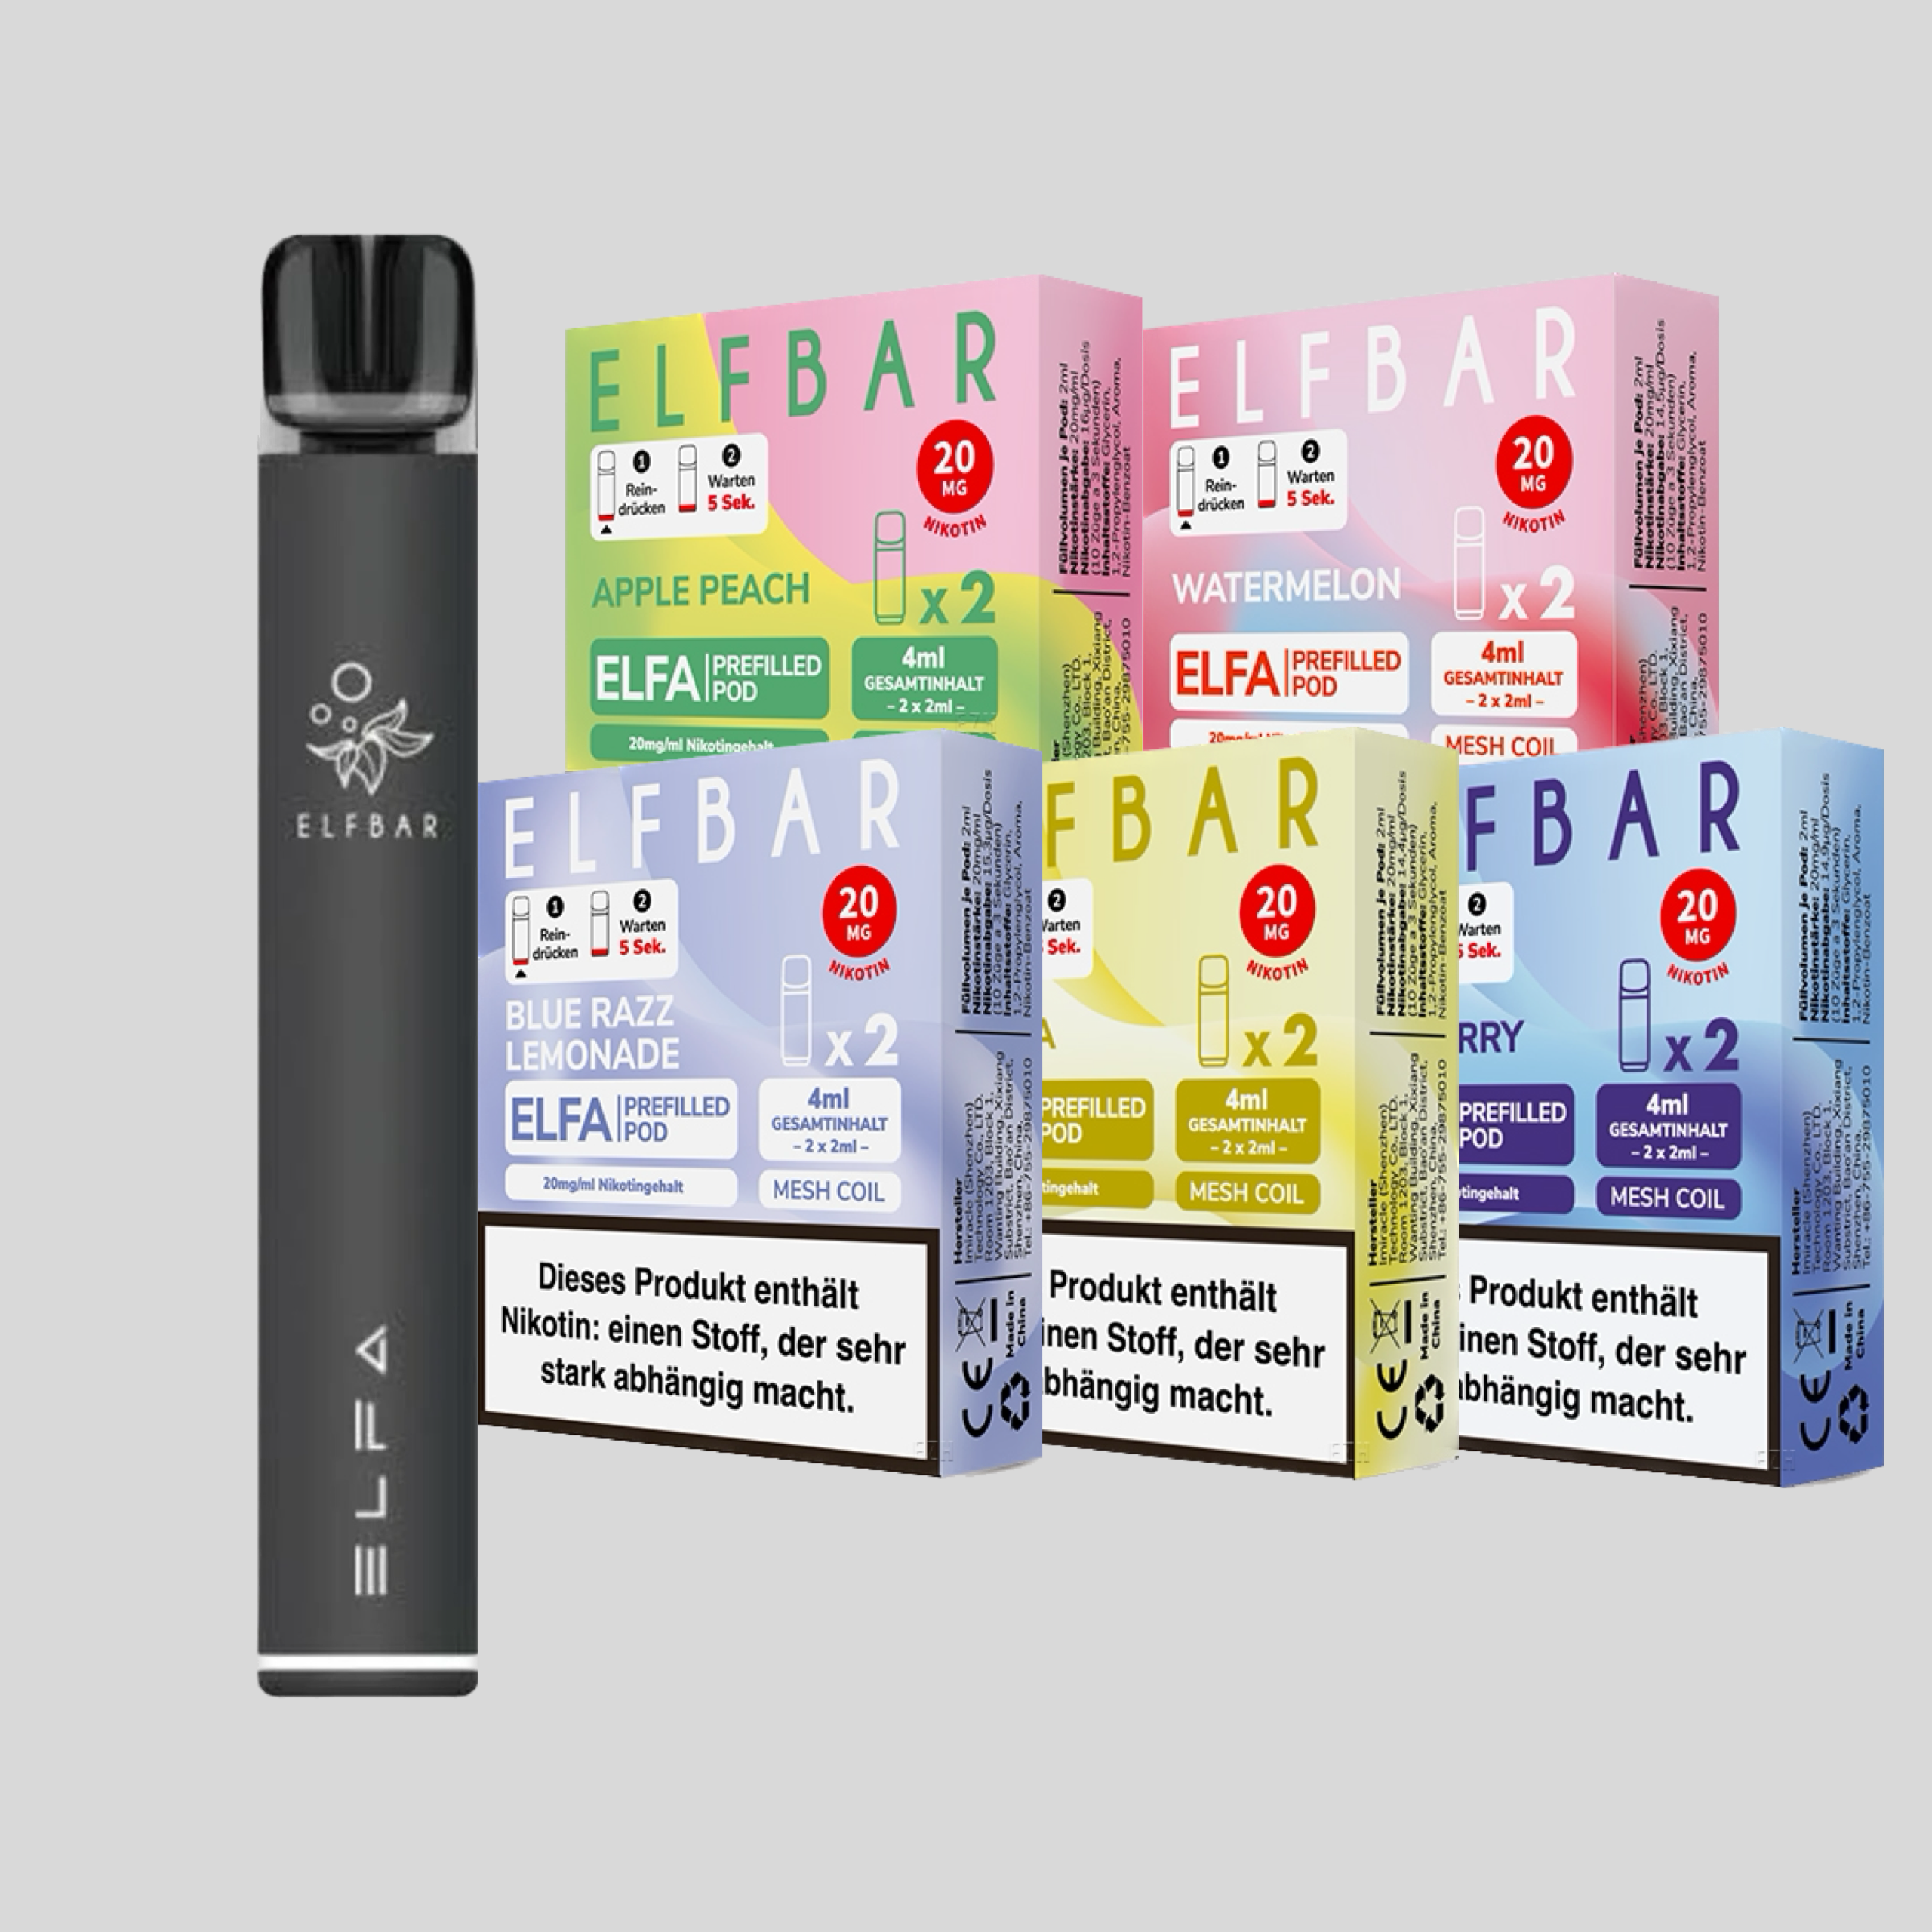 InnoCigs 500 - Probierset / Bundle ohne Nikotin - E-Zigarette